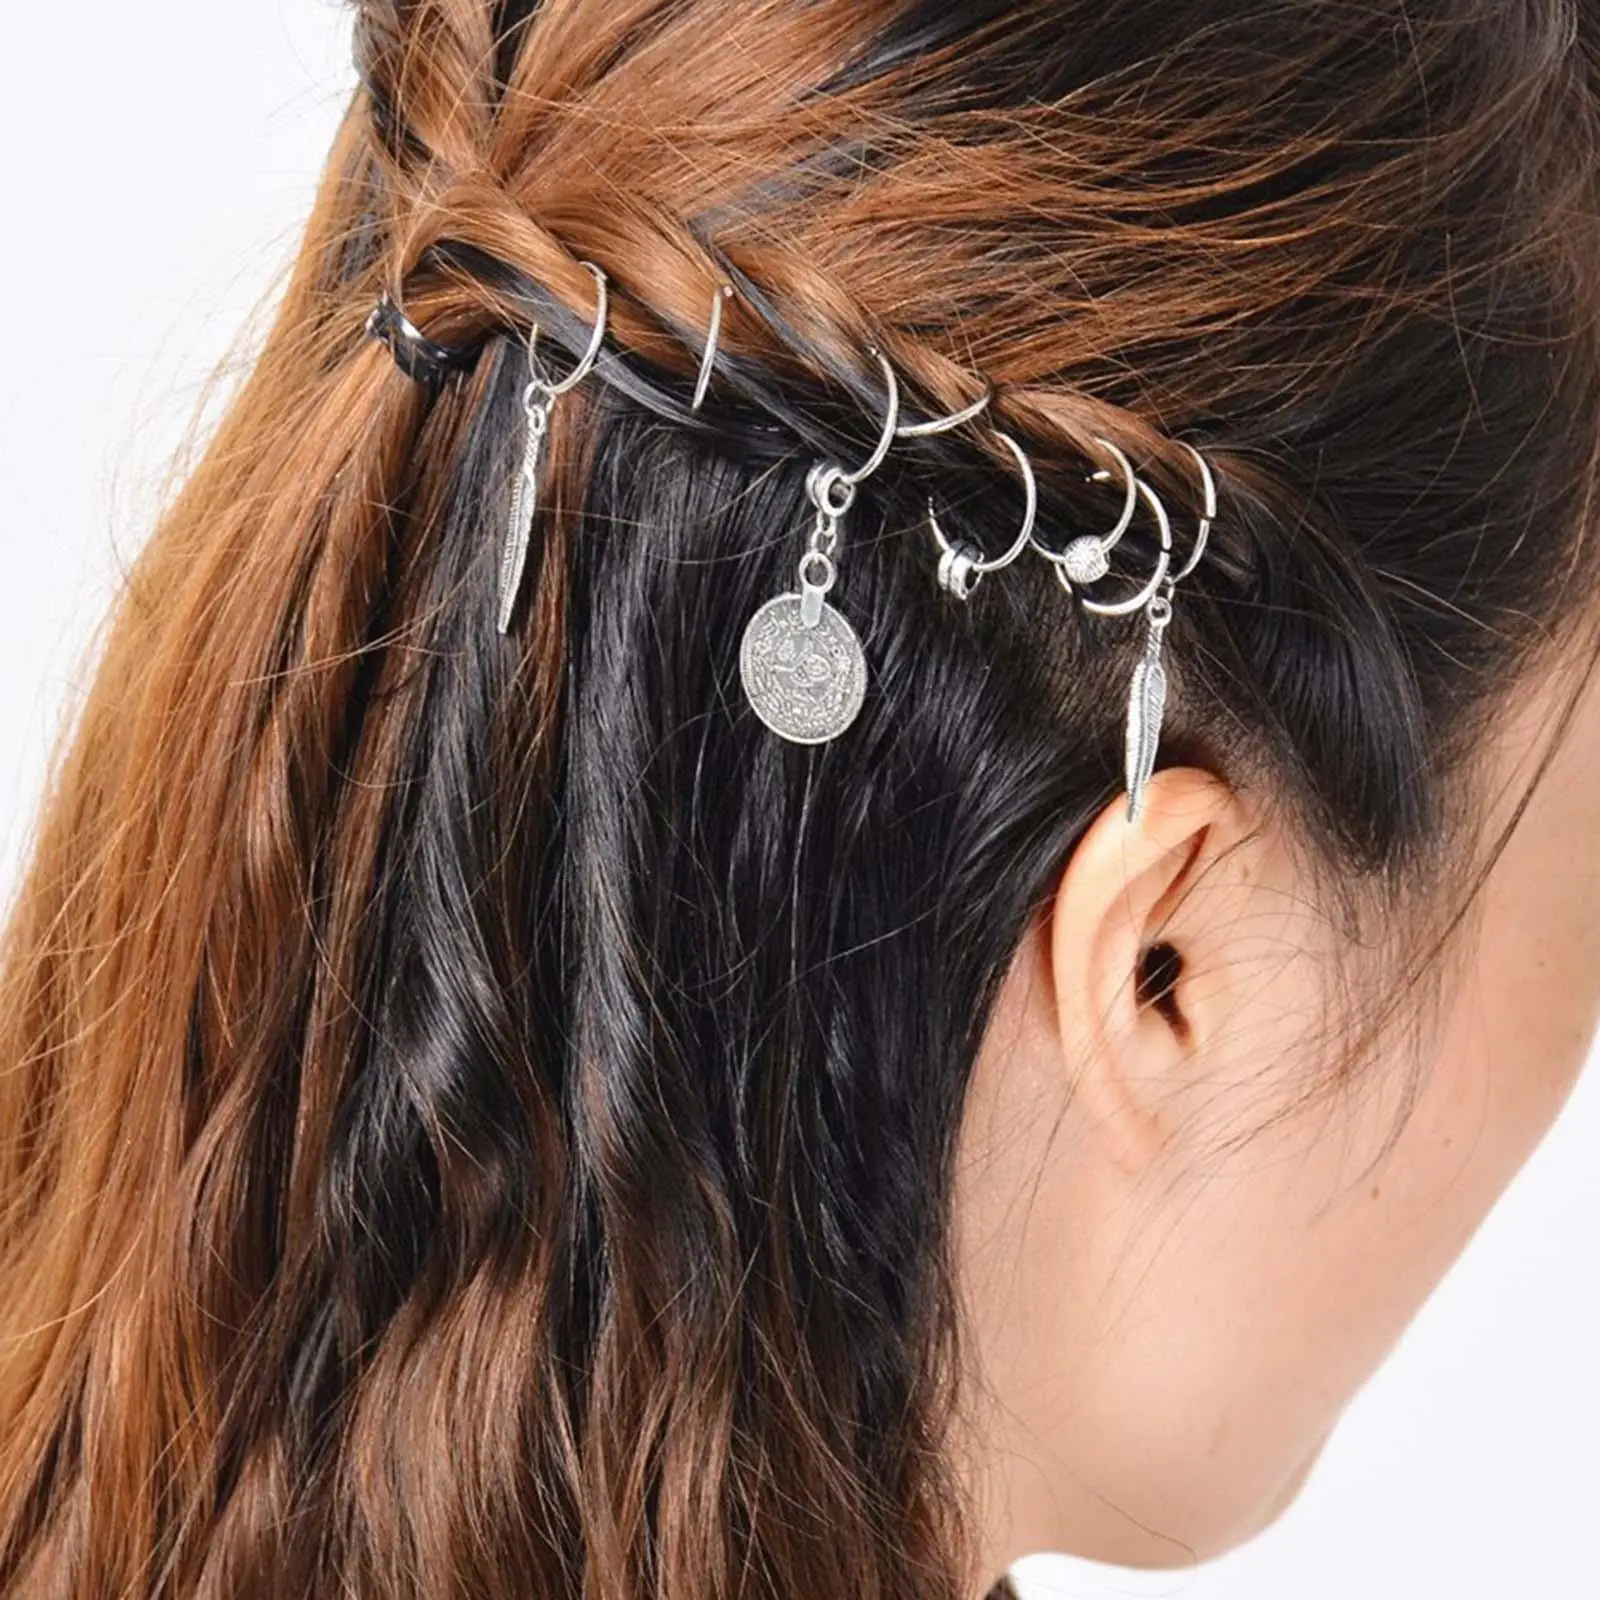 8 Pieces Hair Braid Dreadlock Clips Cuffs Rings jewelry Women Braids Accessories Hip Hop Style Multiple Styles DIY Pendant